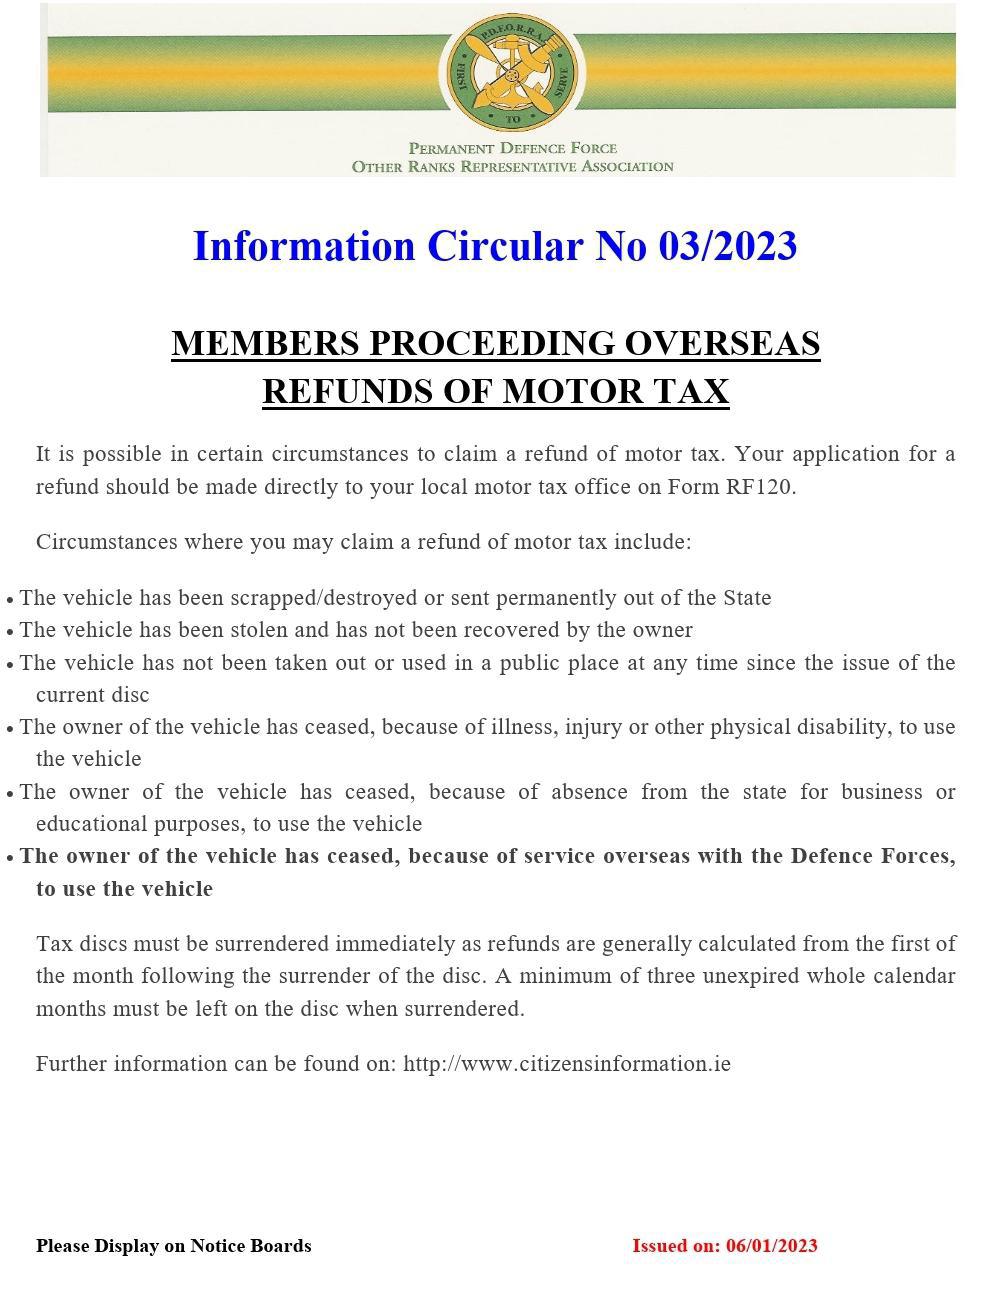 Information Circular No 03 of 23 Refund of Motor Tax members proceeding Overseas